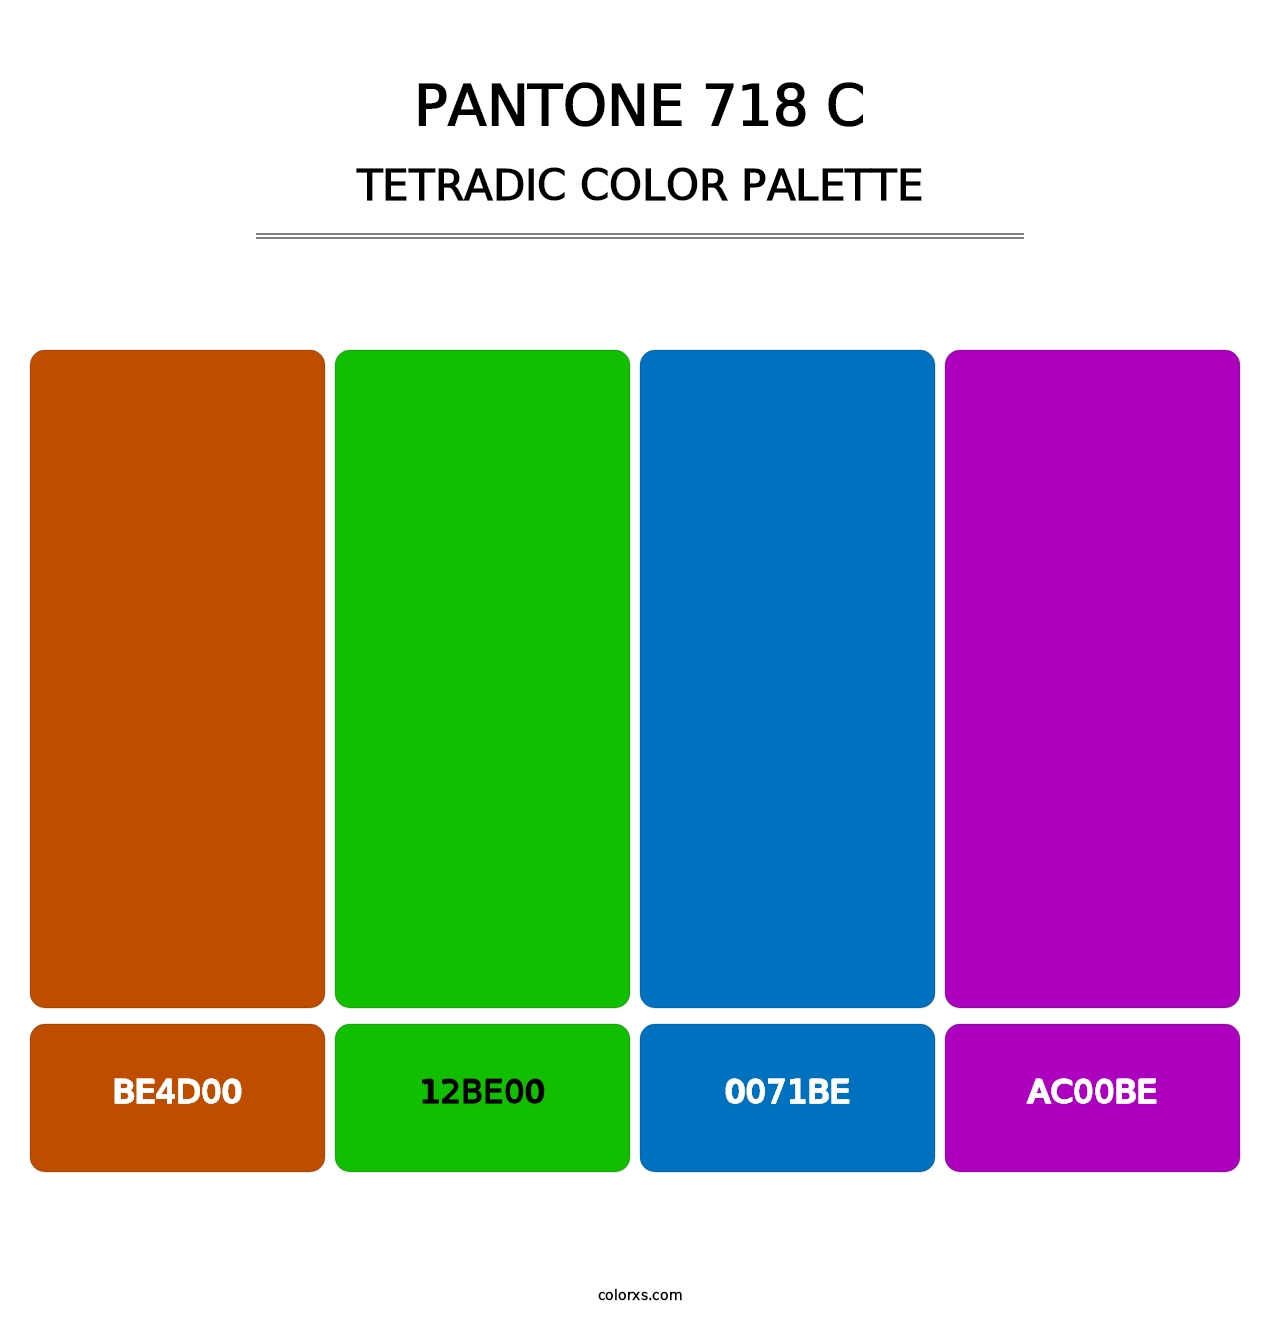 PANTONE 718 C - Tetradic Color Palette